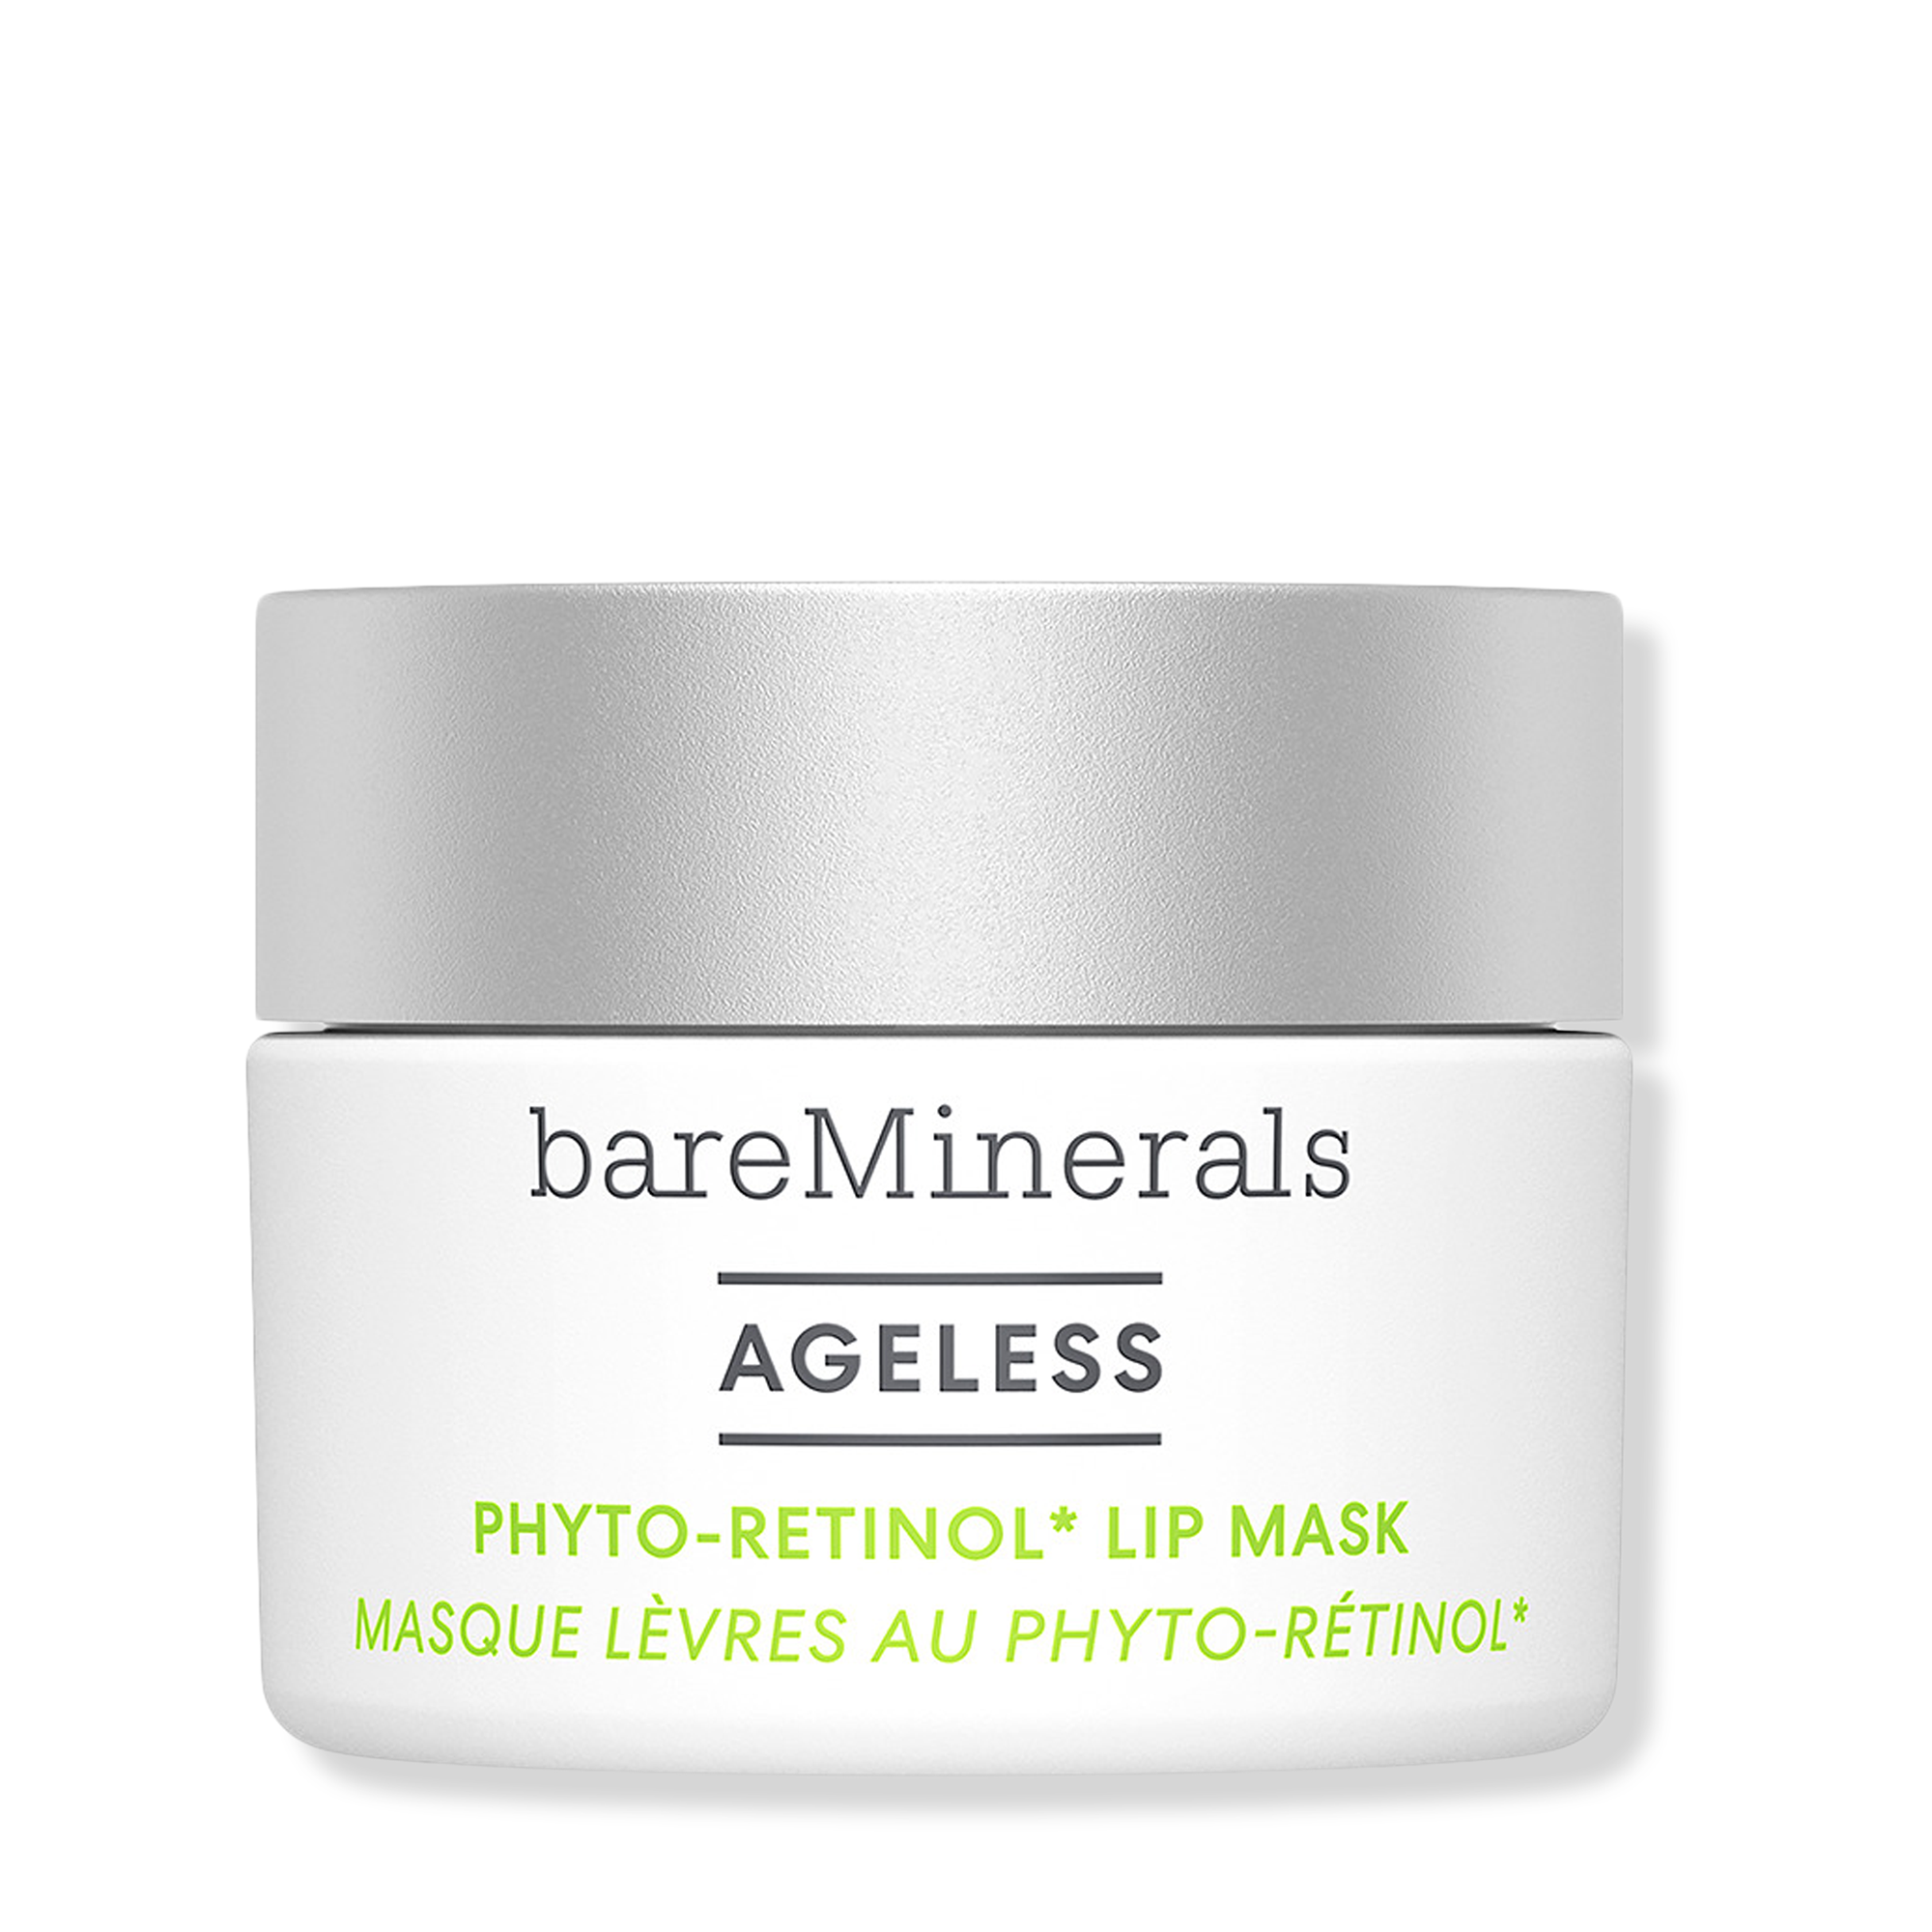 Bare Minerals Ageless Phyto-Retinol Lip Mask / 0.46oz